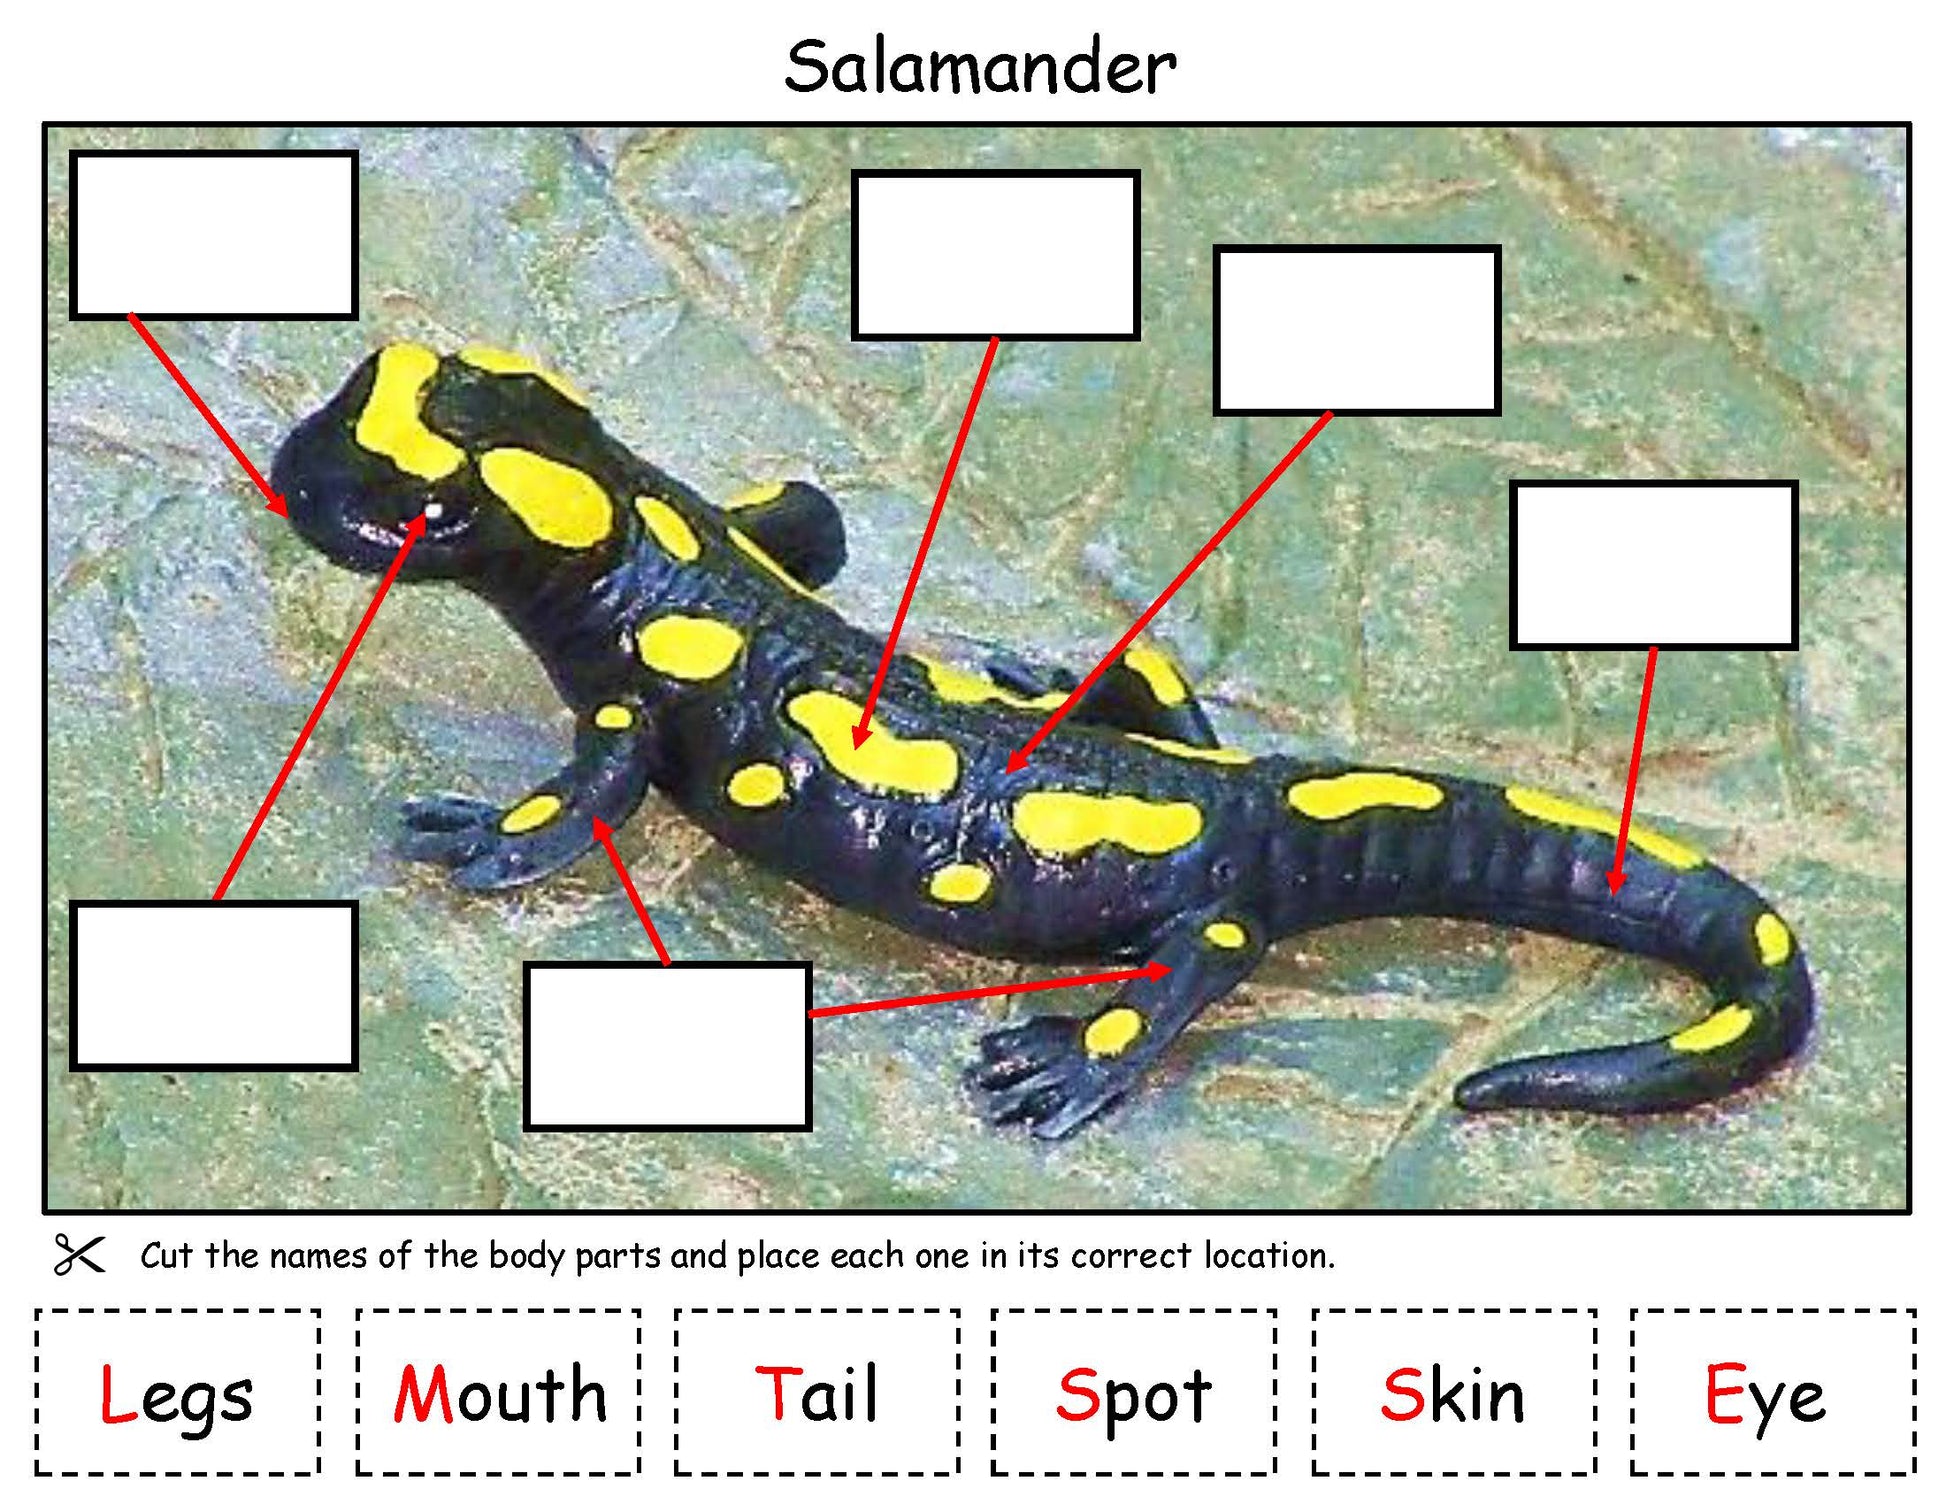 Salamander Body Parts